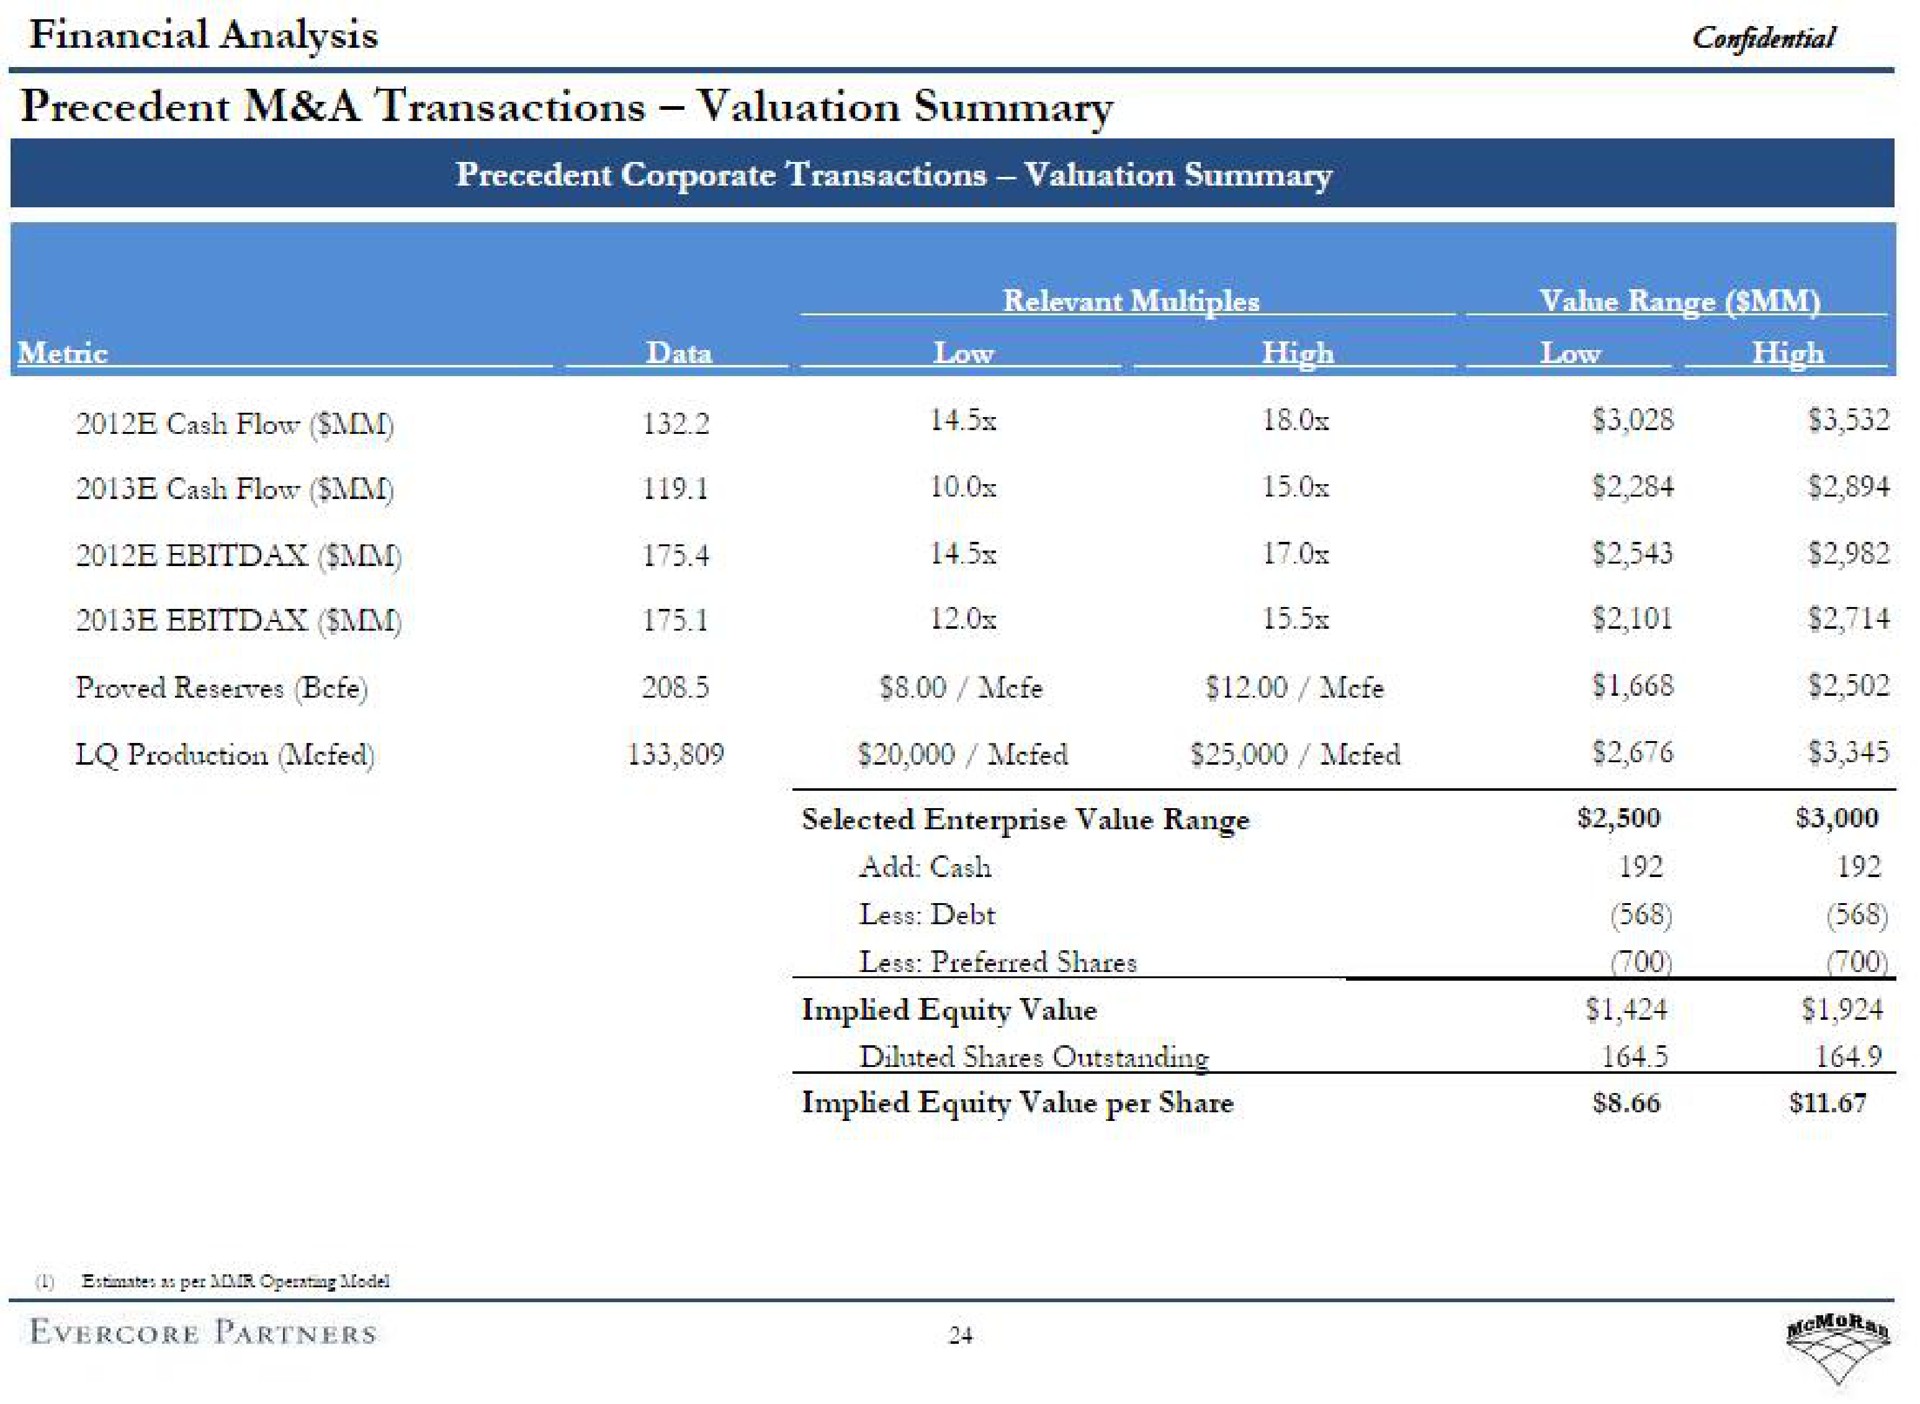 financial analysis confidential precedent a transactions valuation summary | Evercore